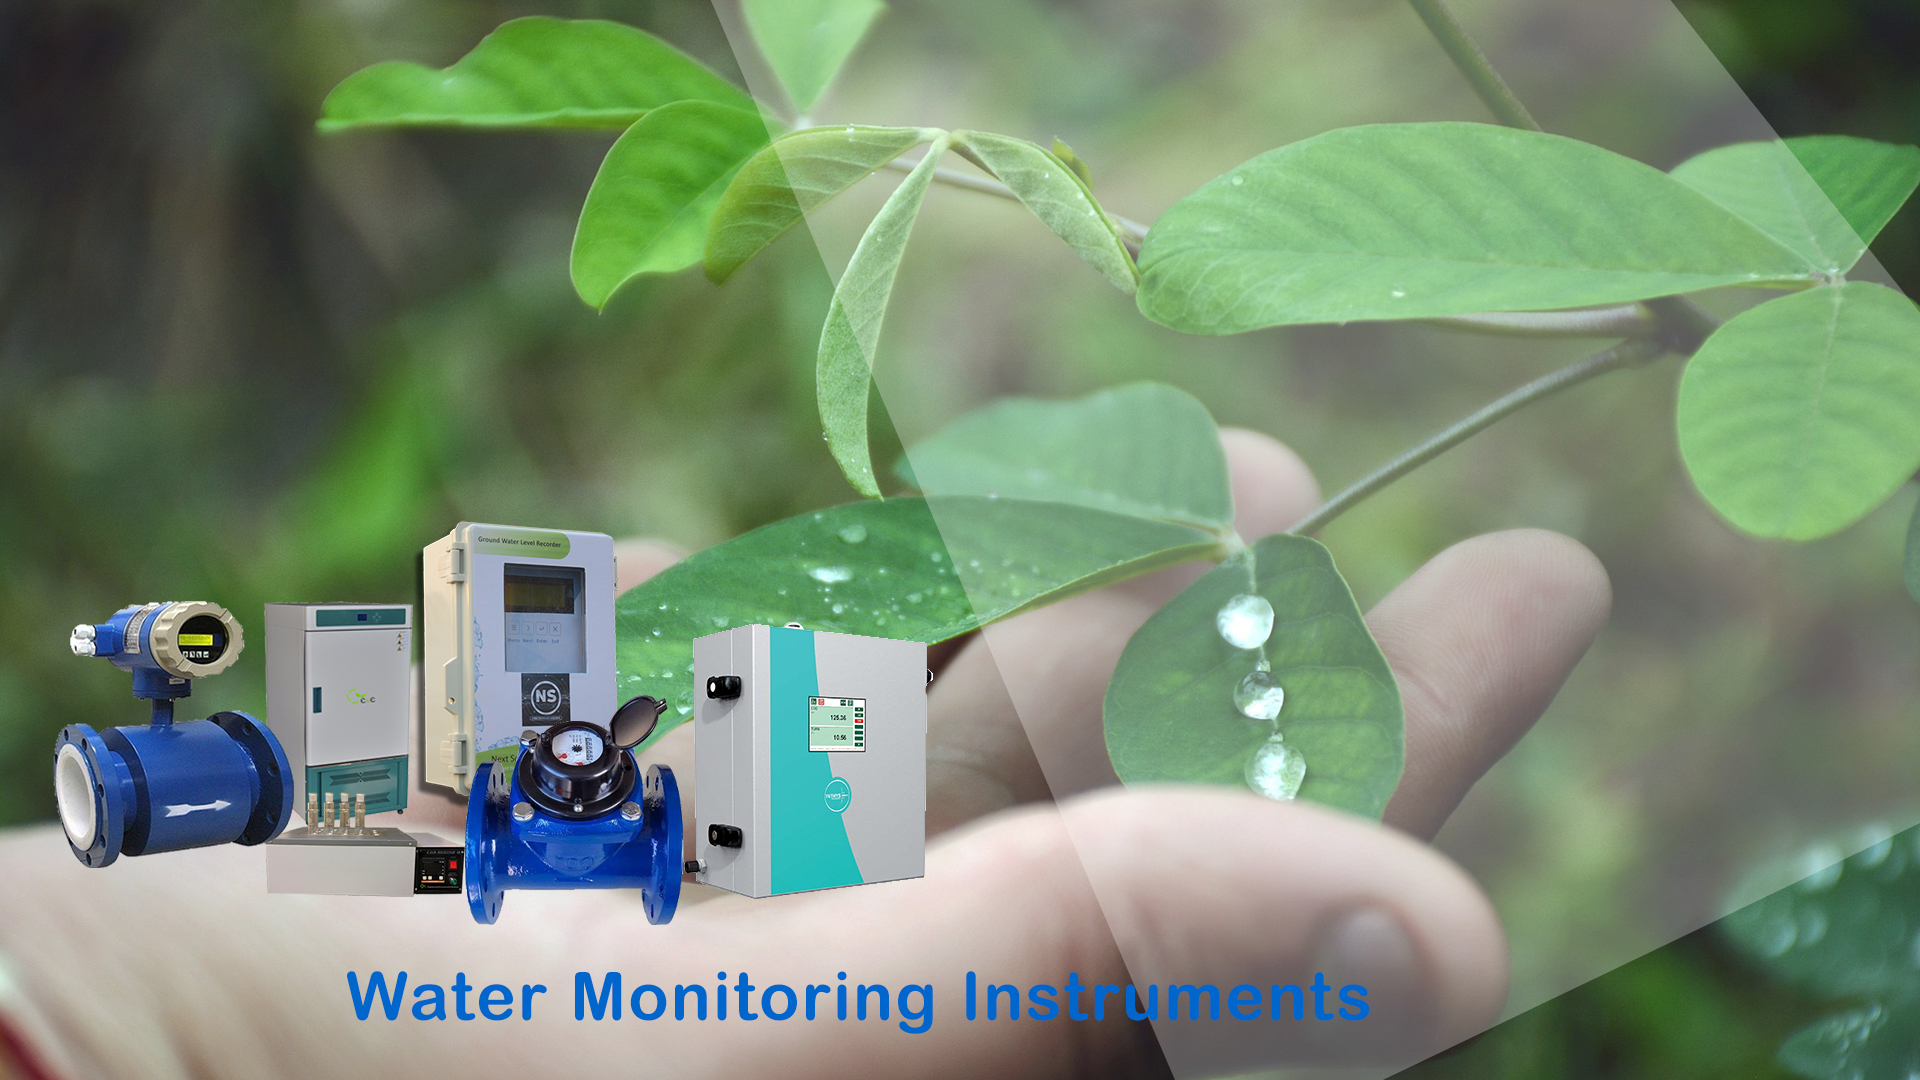 Water monitoring instrument